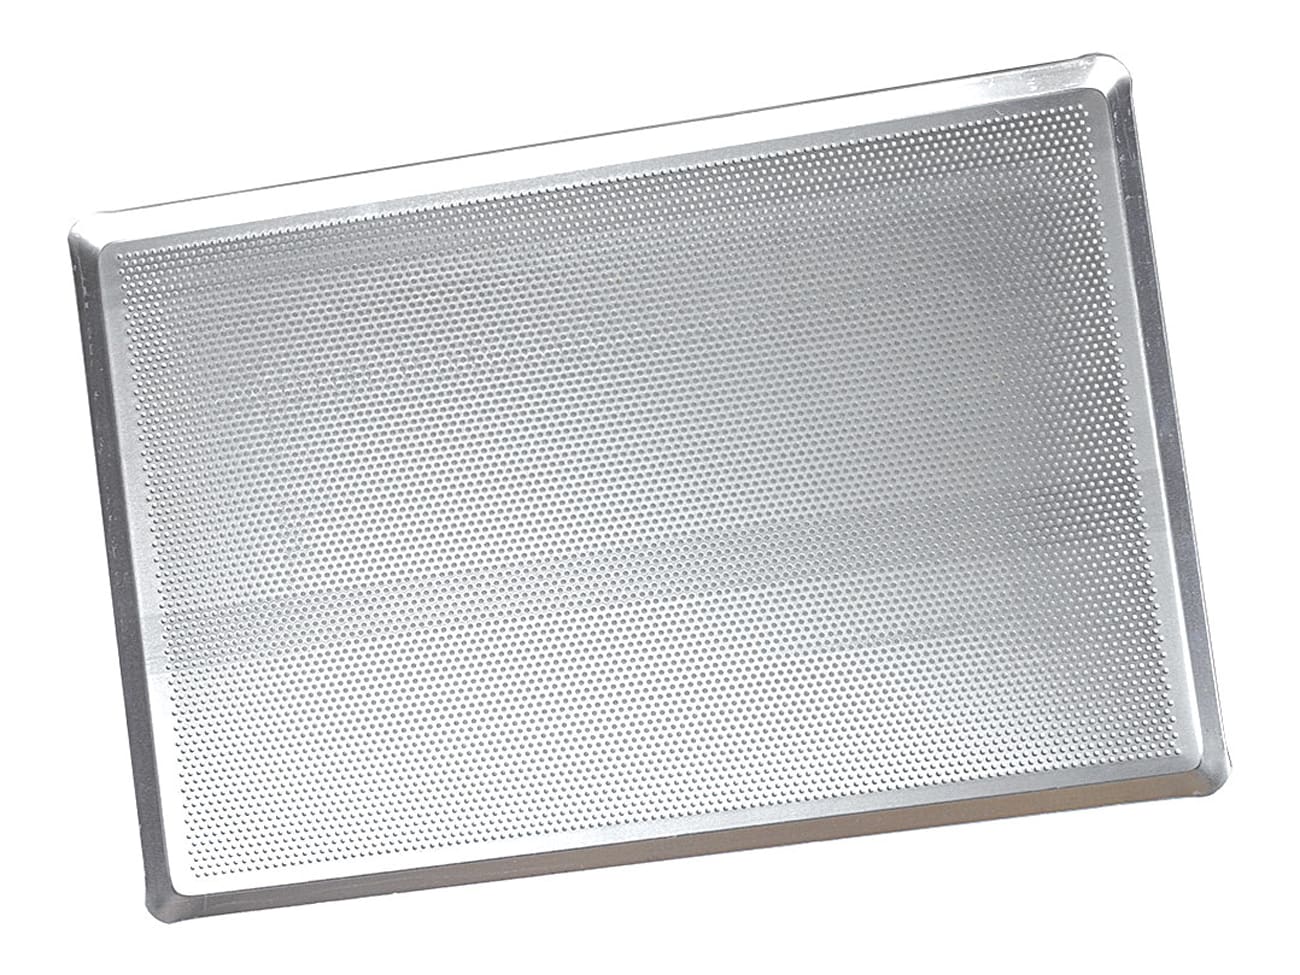 Paderno World Cuisine 41756-60 Flat Perforated Aluminum Baking Sheet